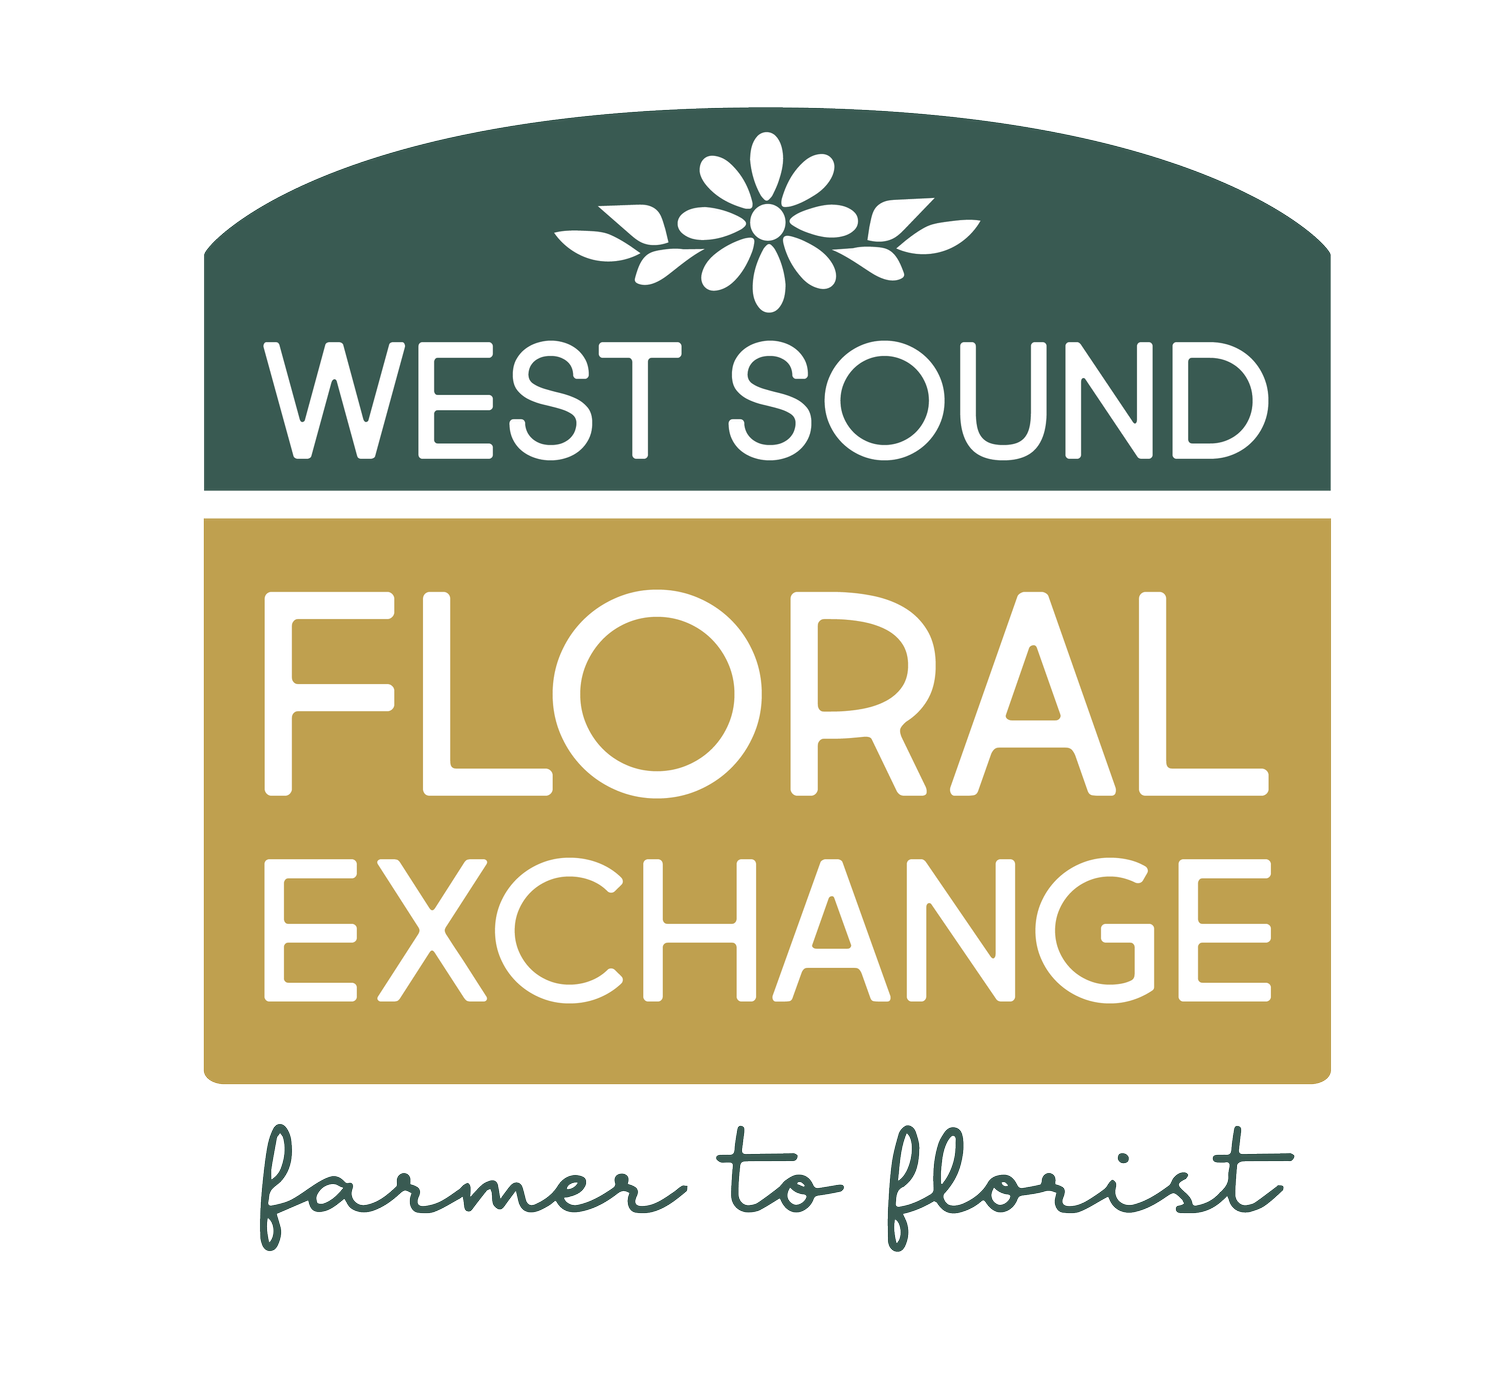 West Sound Floral Exchange